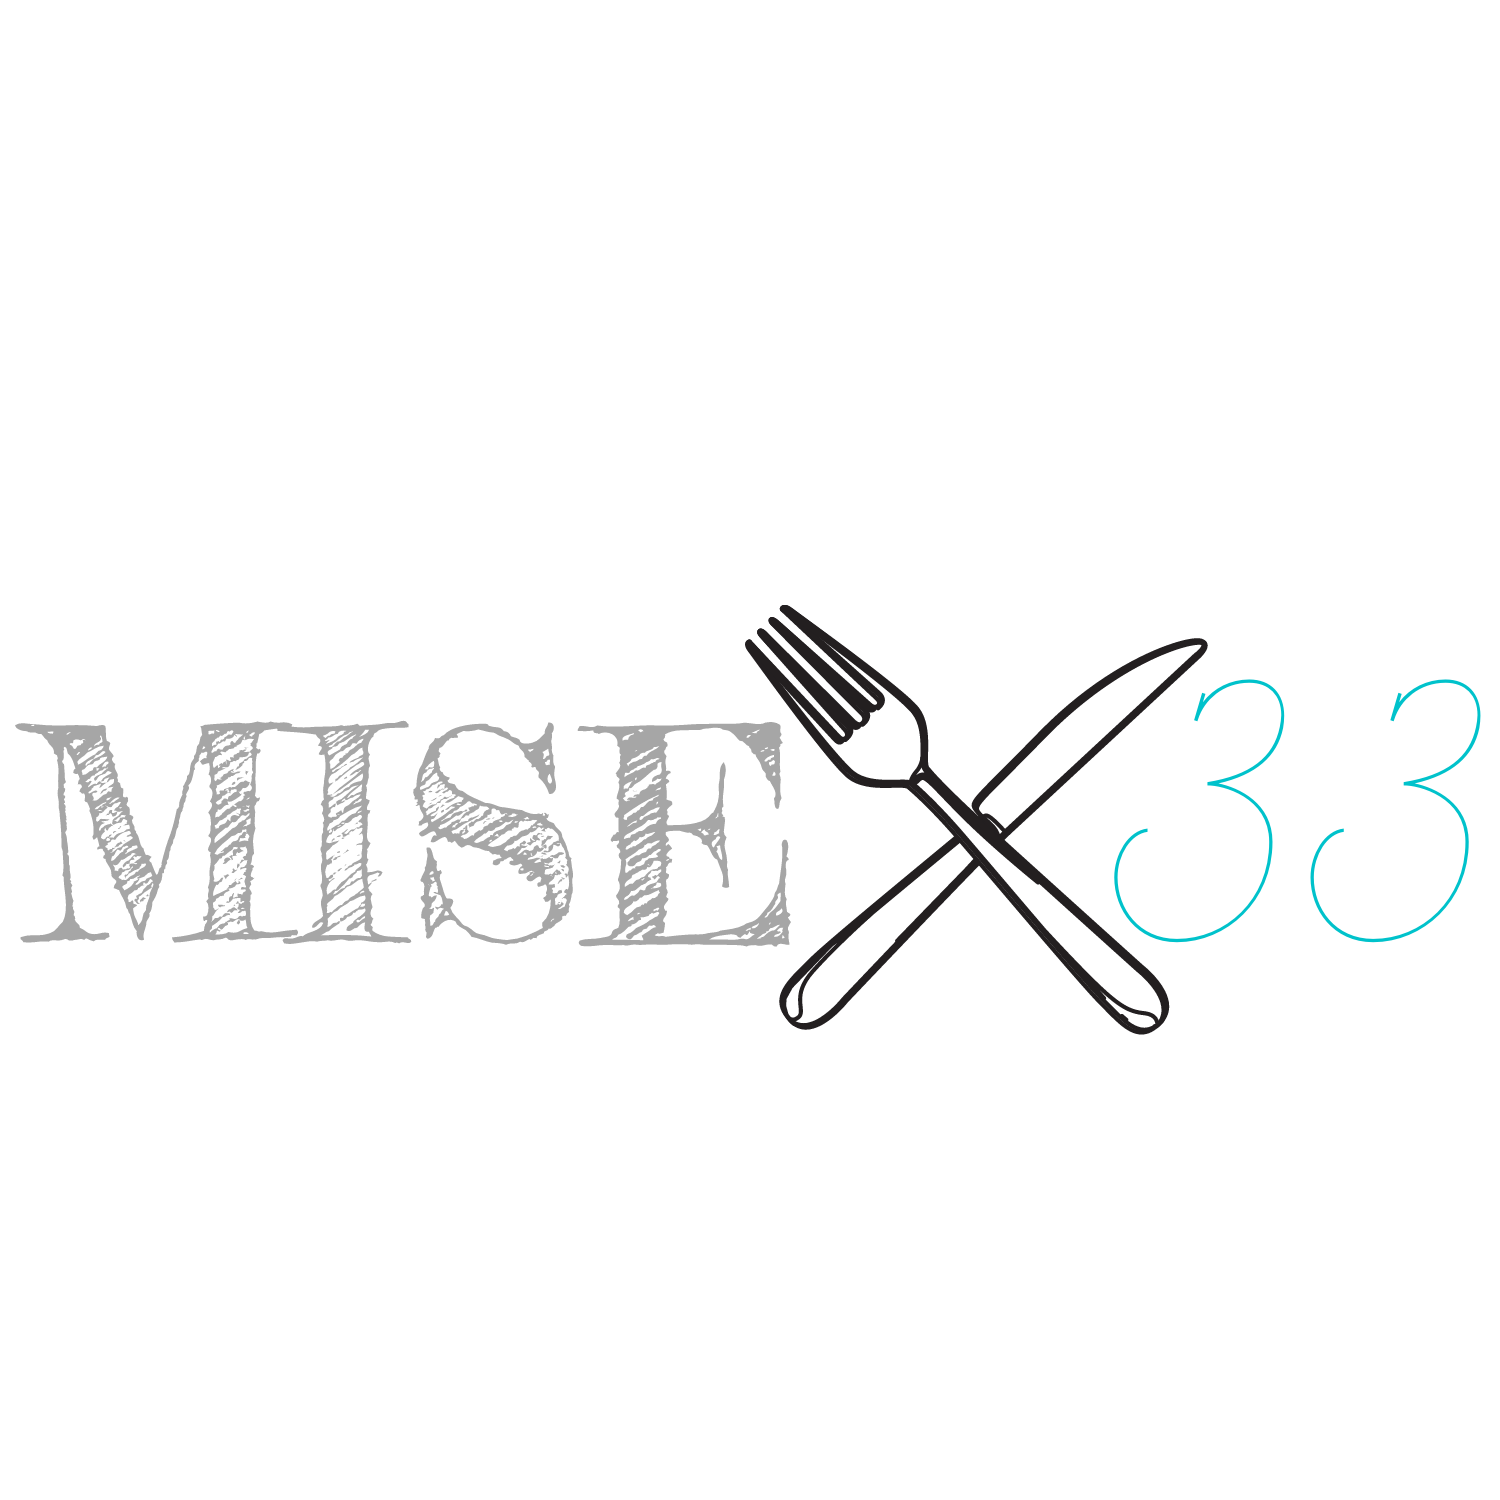 Mise 33